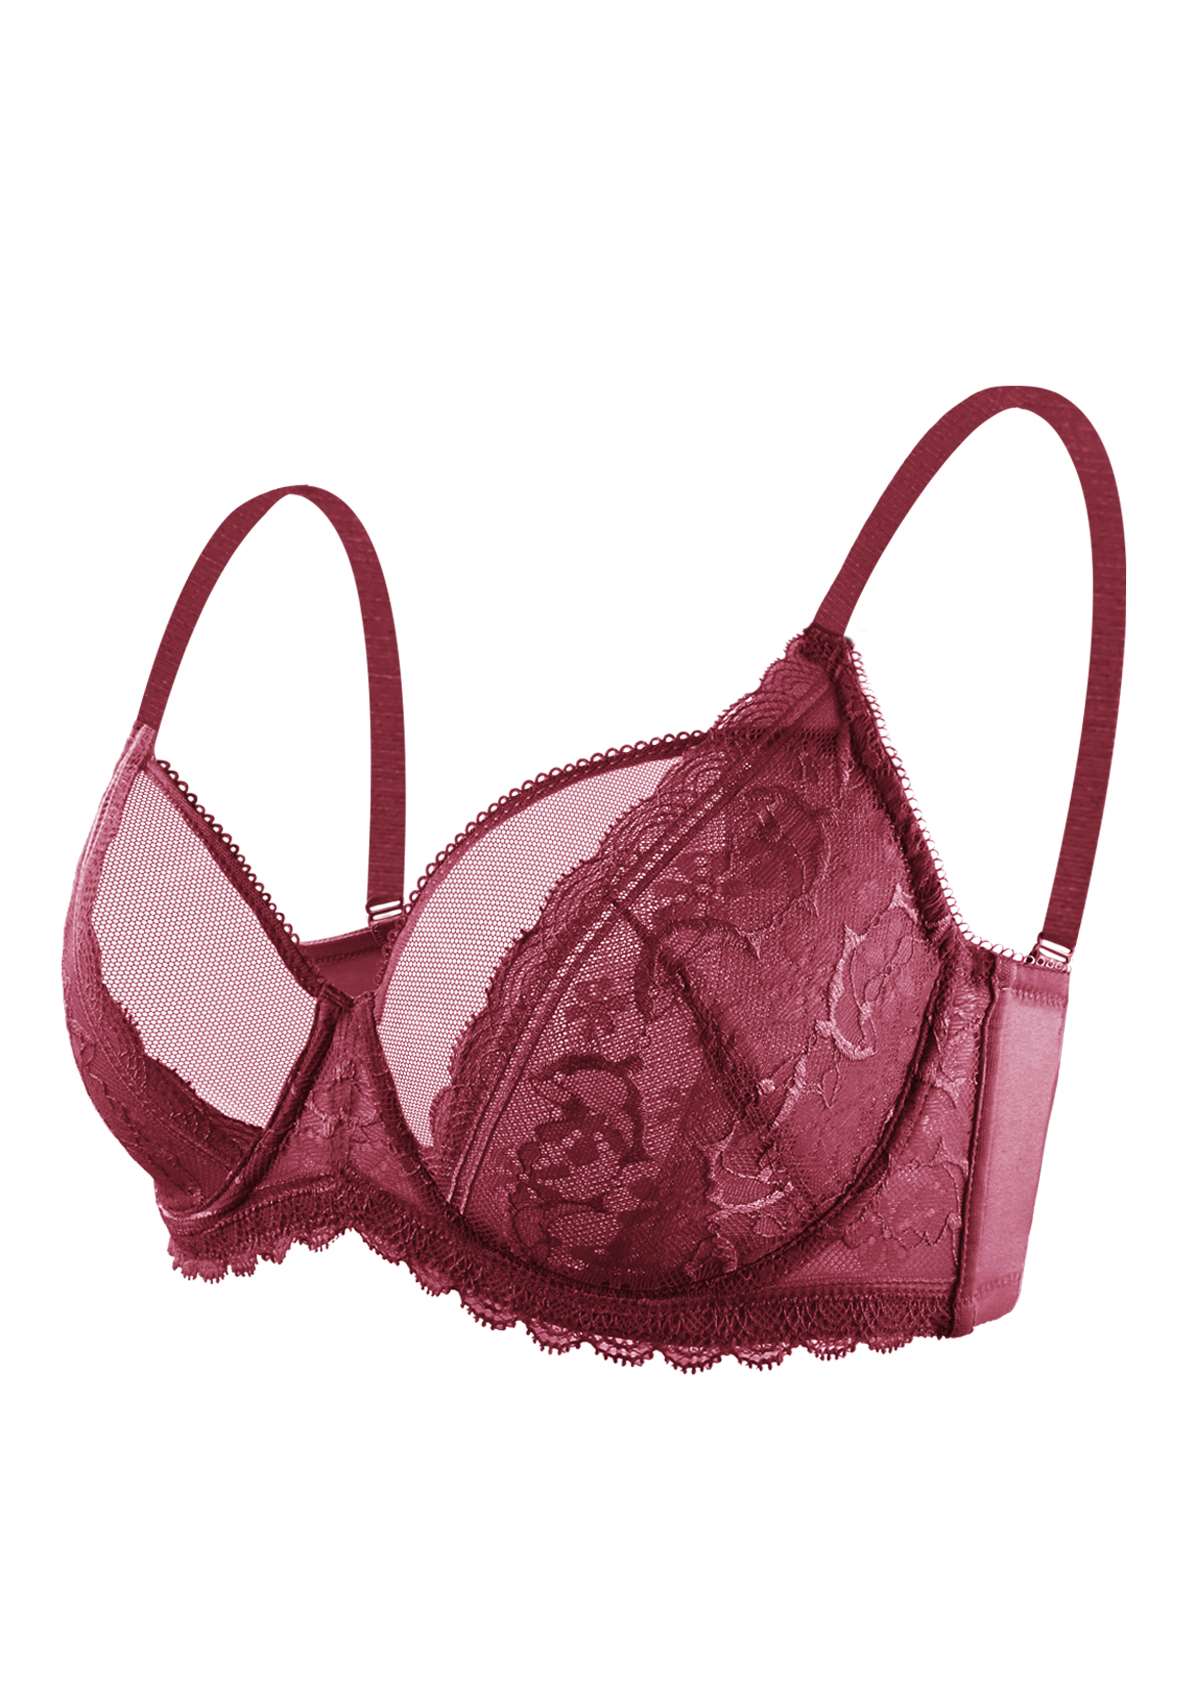 HSIA Anemone Sexy Lace Bra Panty Set: Thick Strap Bra - Burgundy / 36 / DDD/F